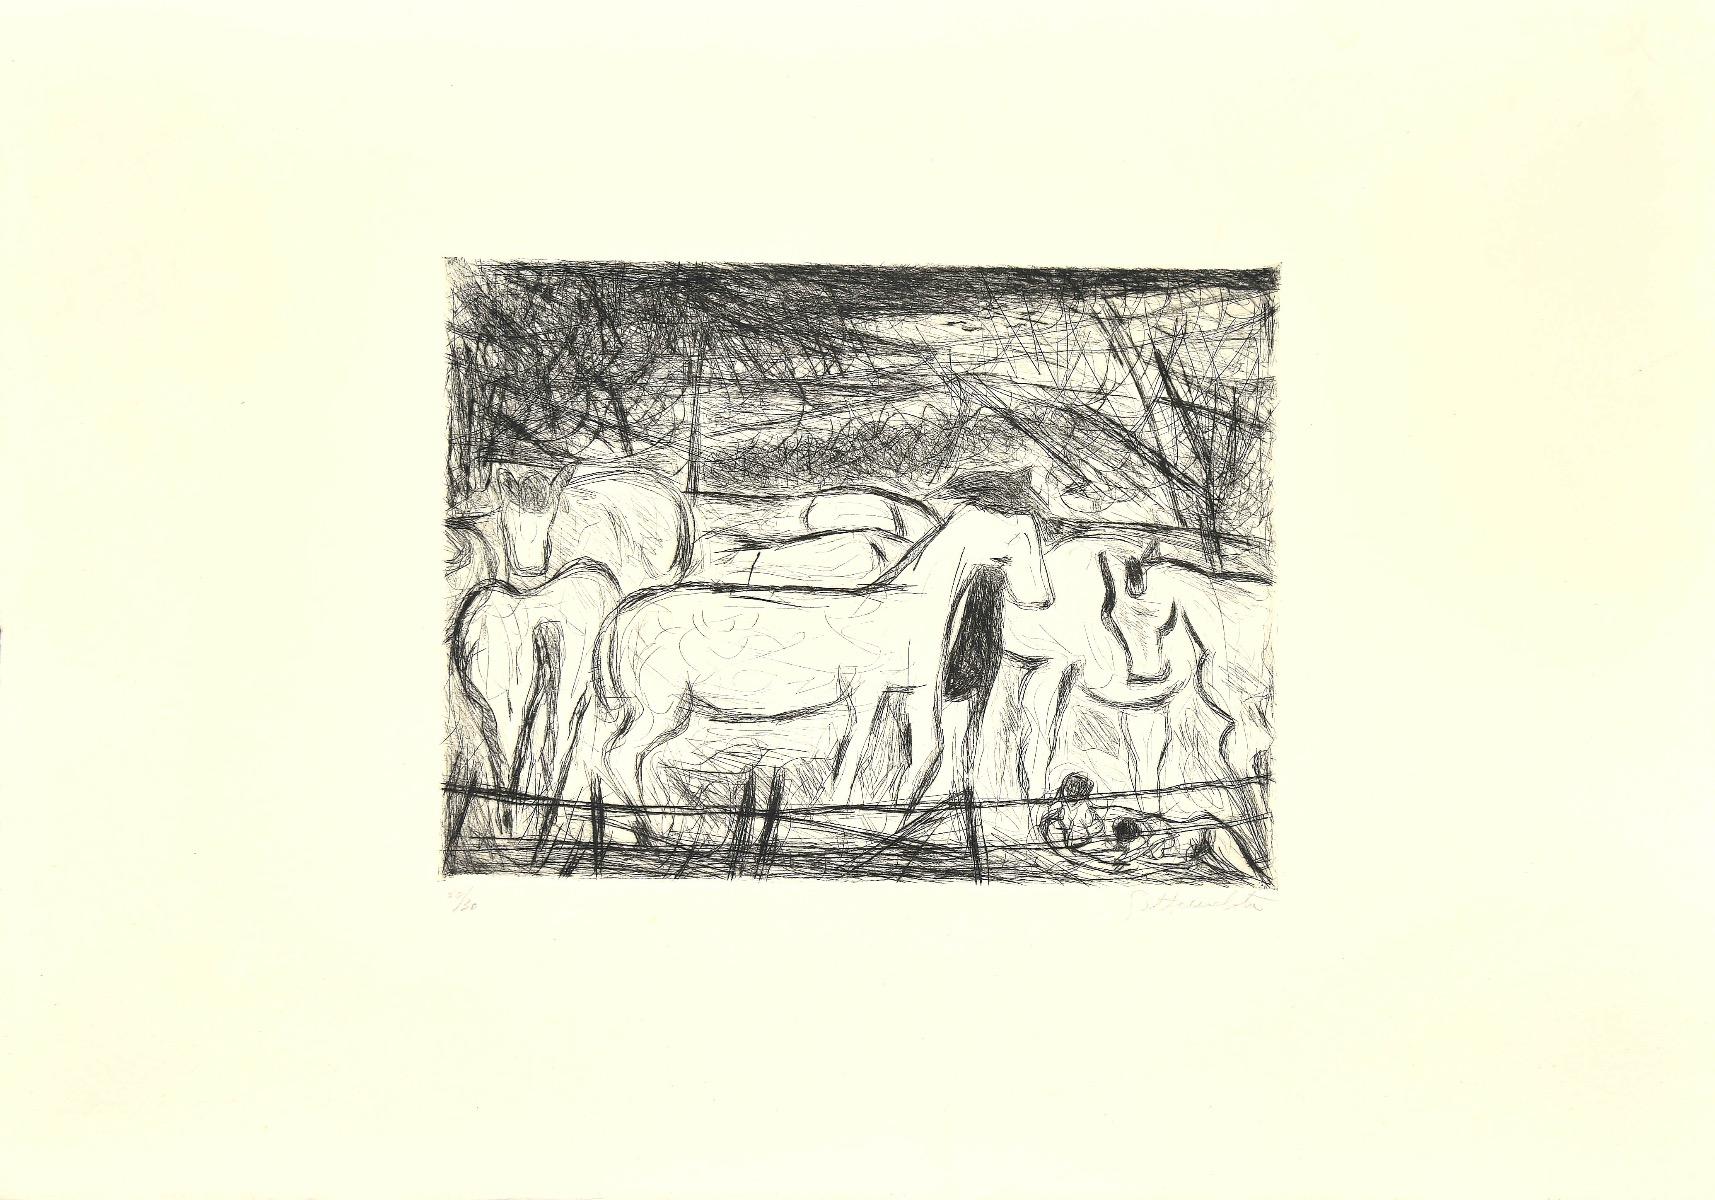 Nazareno Gattamenata Figurative Print - Horses in the Corral - Original Etching on Paper by Nazareno Gattamelata - 1985